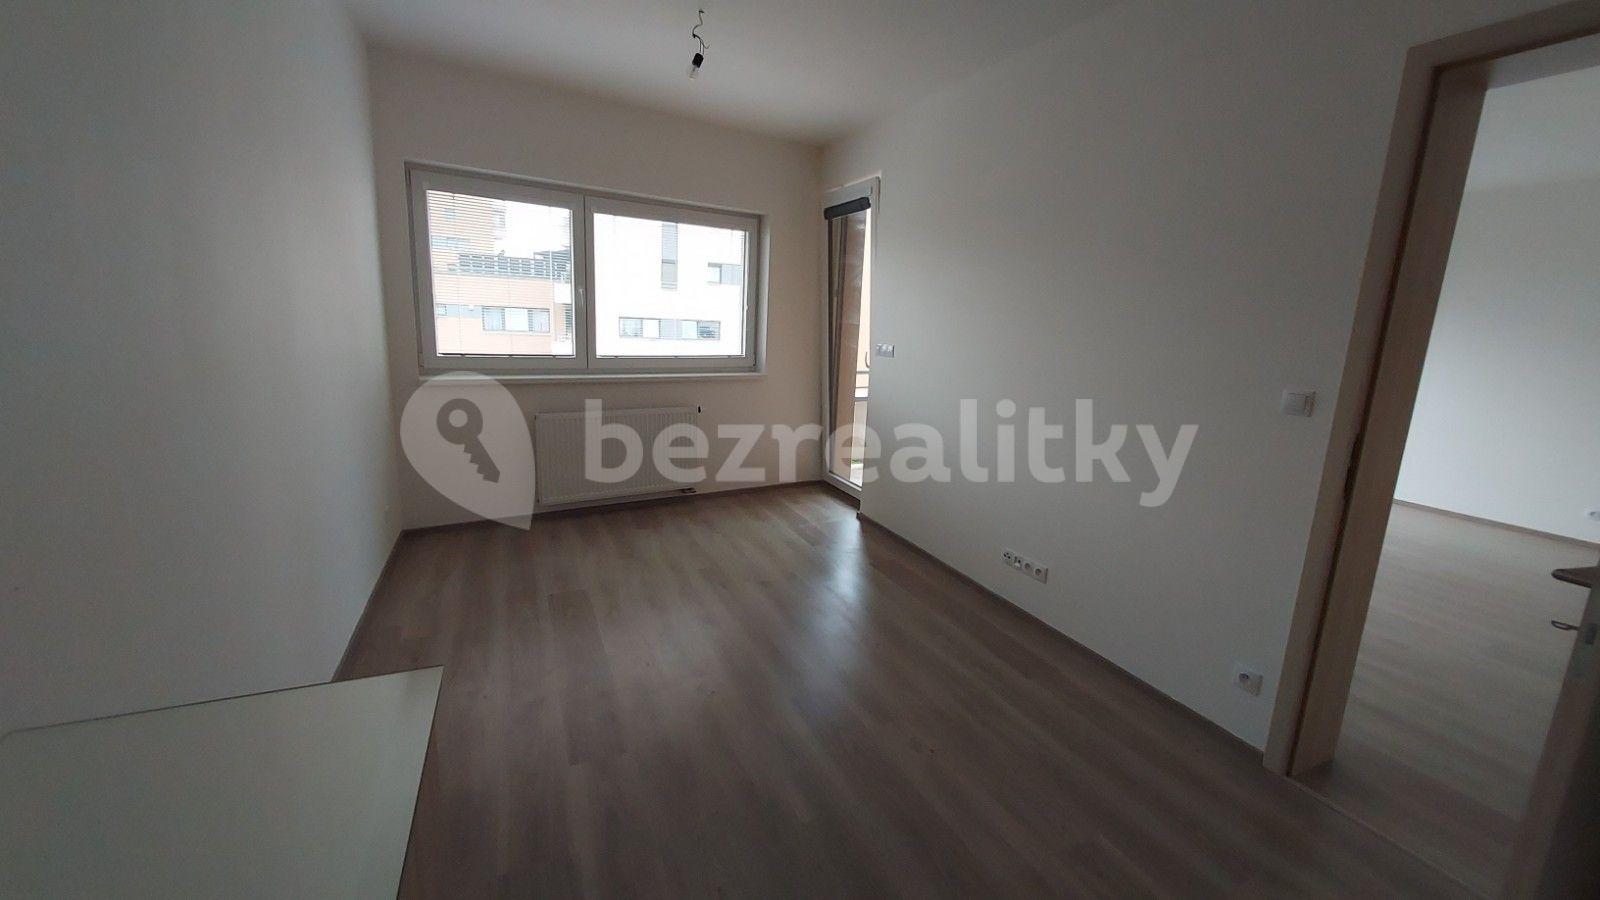 1 bedroom with open-plan kitchen flat to rent, 54 m², Kramperova, Prague, Prague